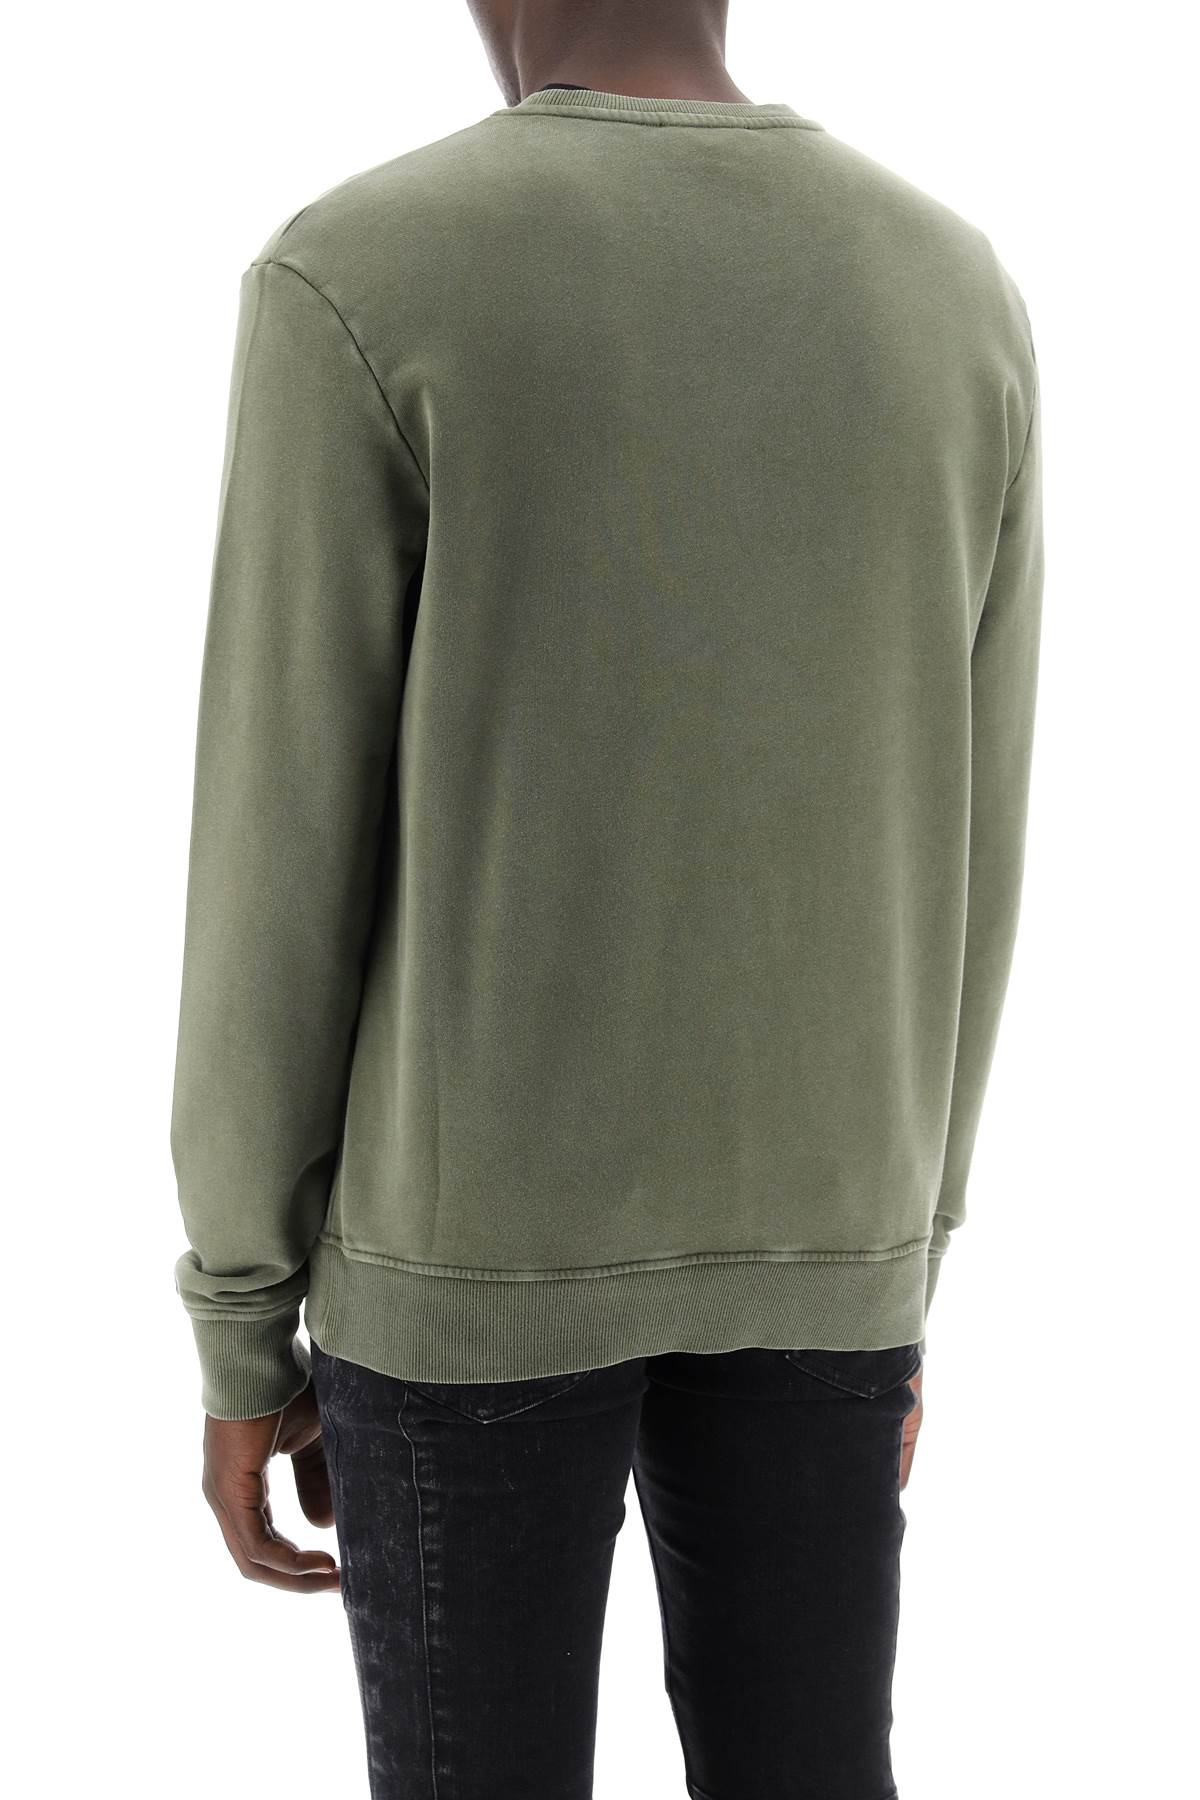 Organic Cotton Crewneck Sweatshirt with Vintage Balmain Logo in Green for Men